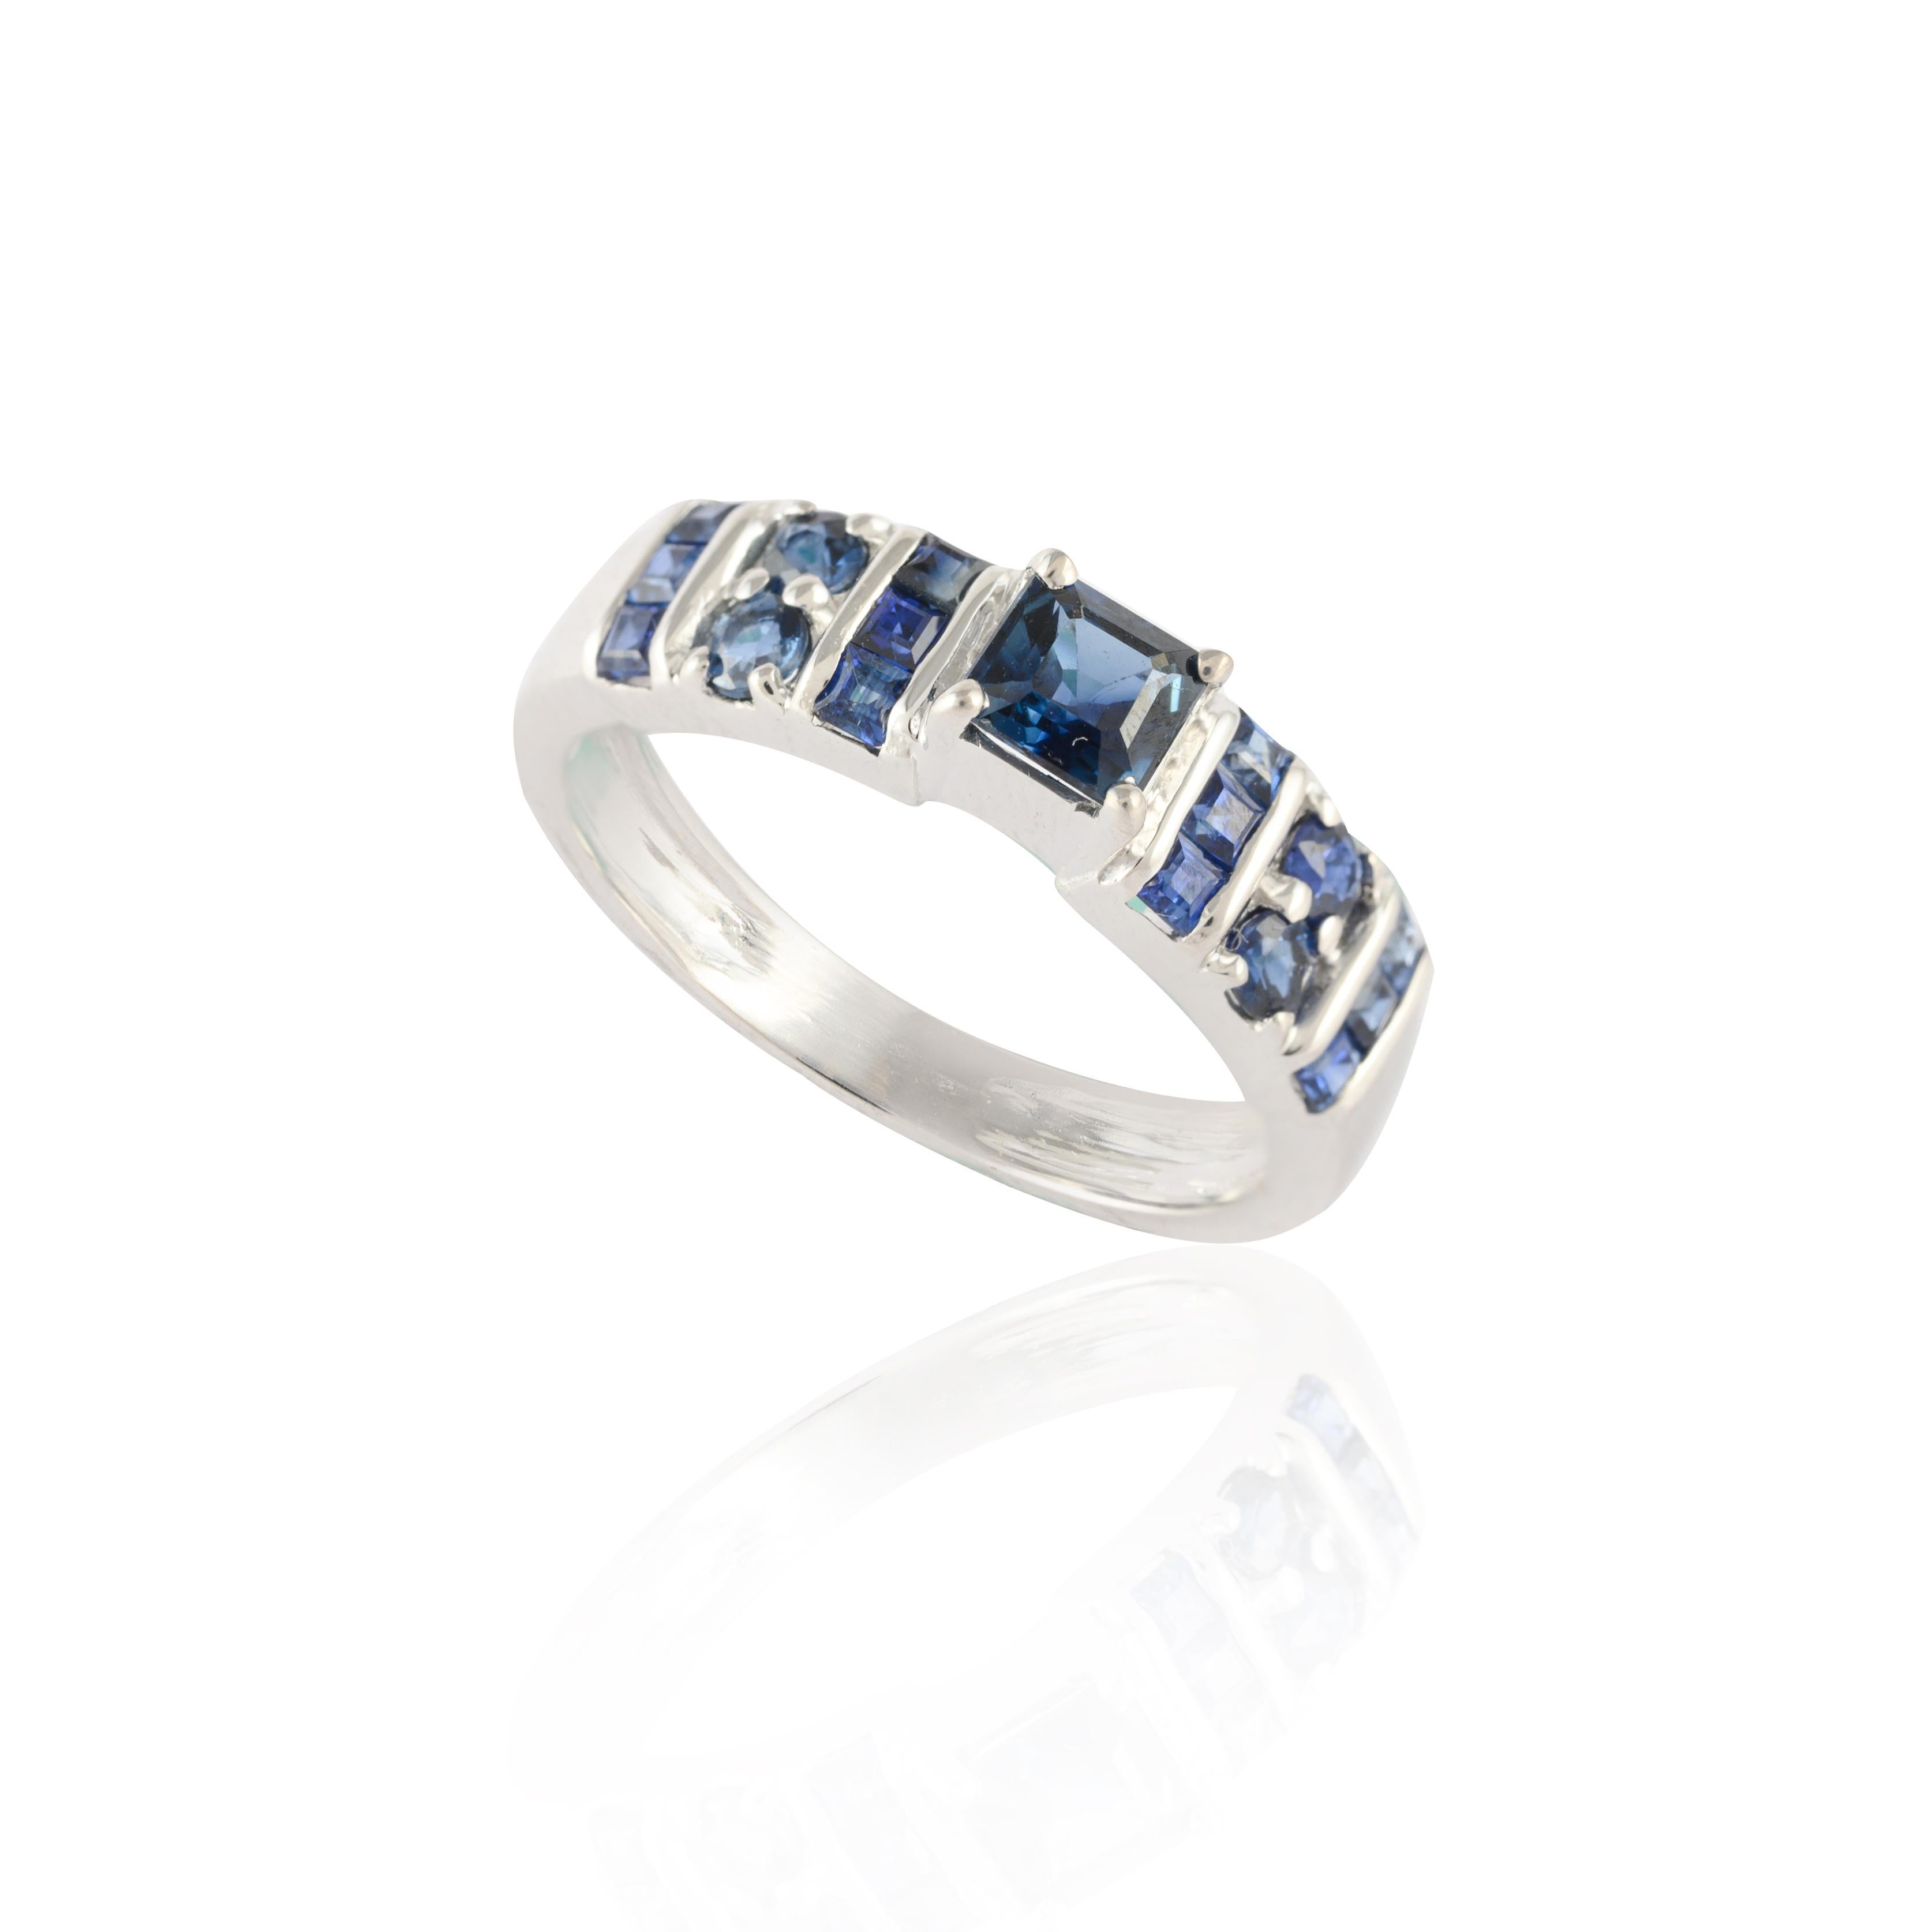 For Sale:  Natural Dark Blue Sapphire Handmade Unisex Ring in 14K Solid White Gold 9